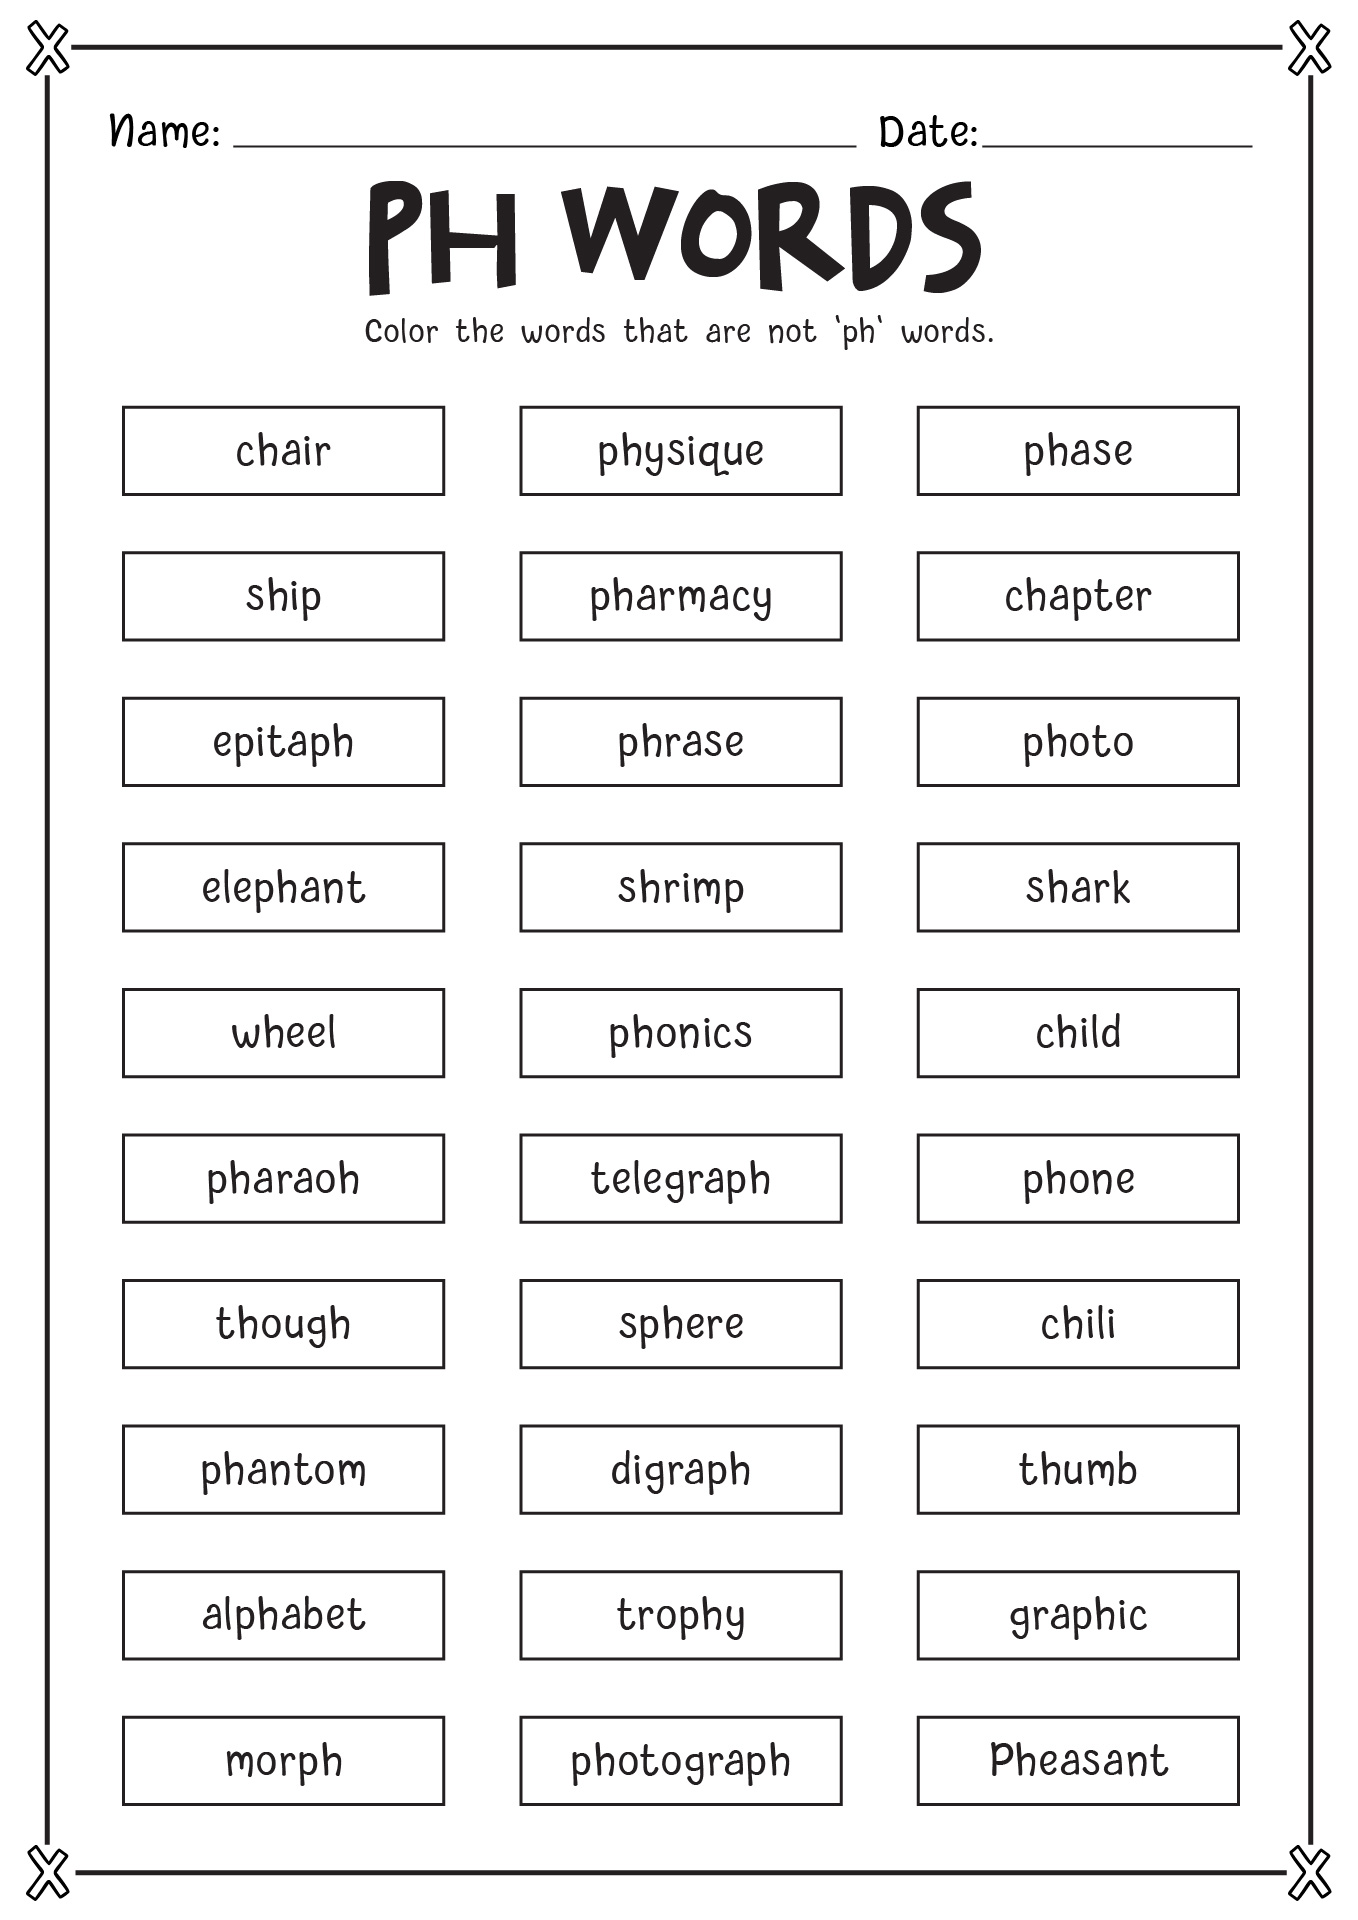 Ph Words Worksheets Image